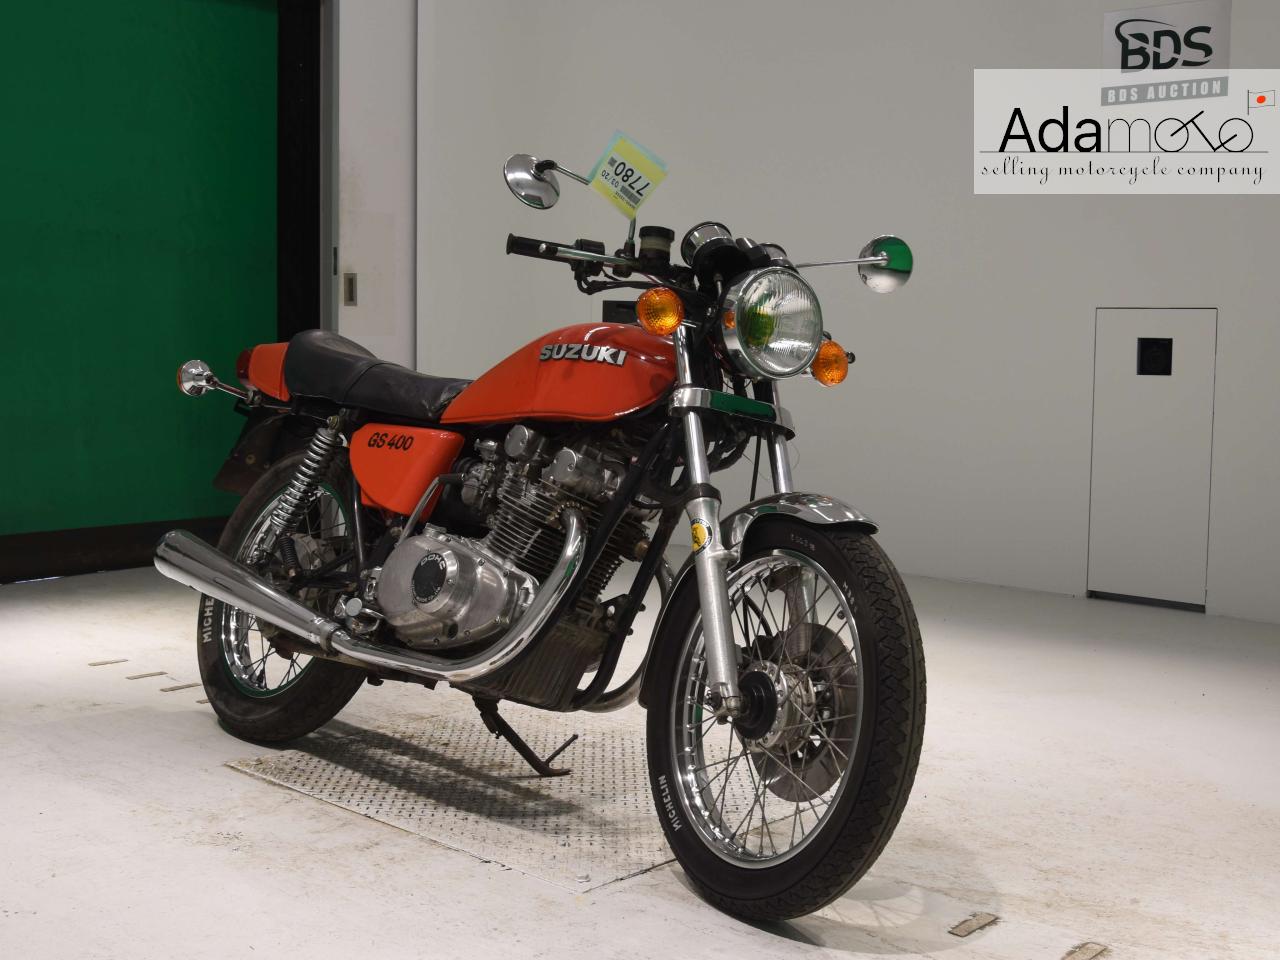 Suzuki GS400 - Adamoto - Motorcycles from Japan